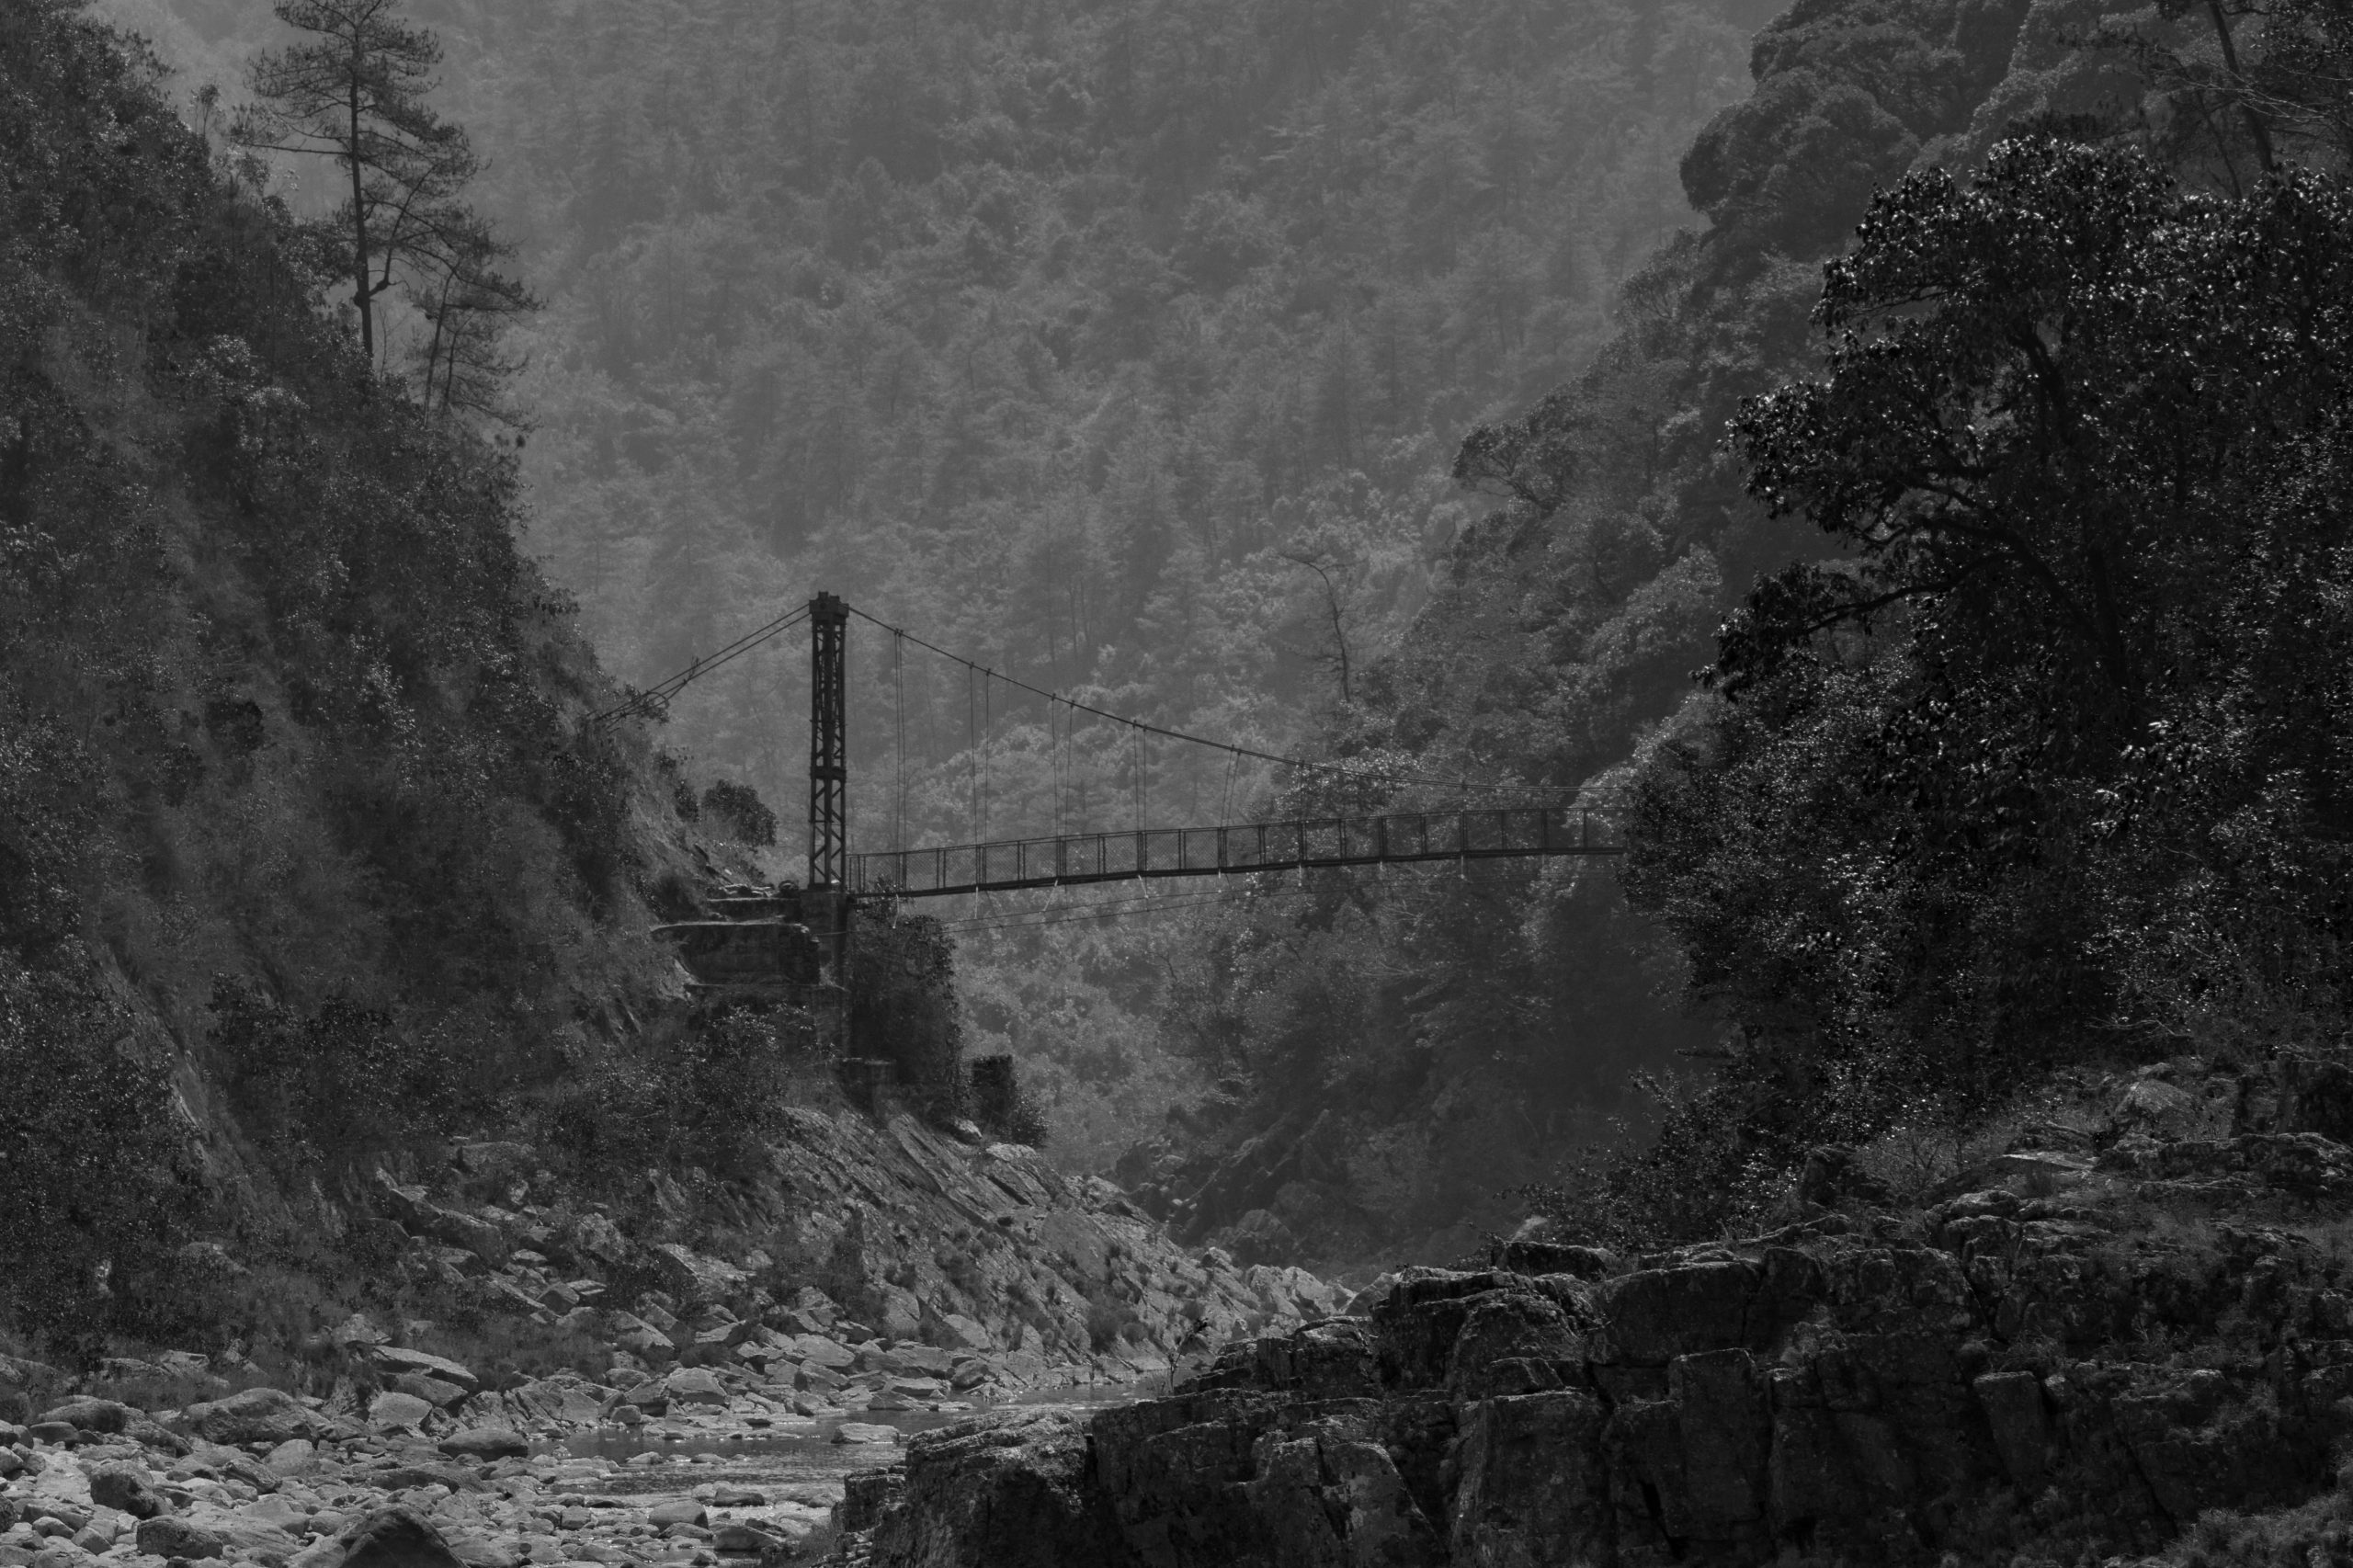 A bridge across to hills